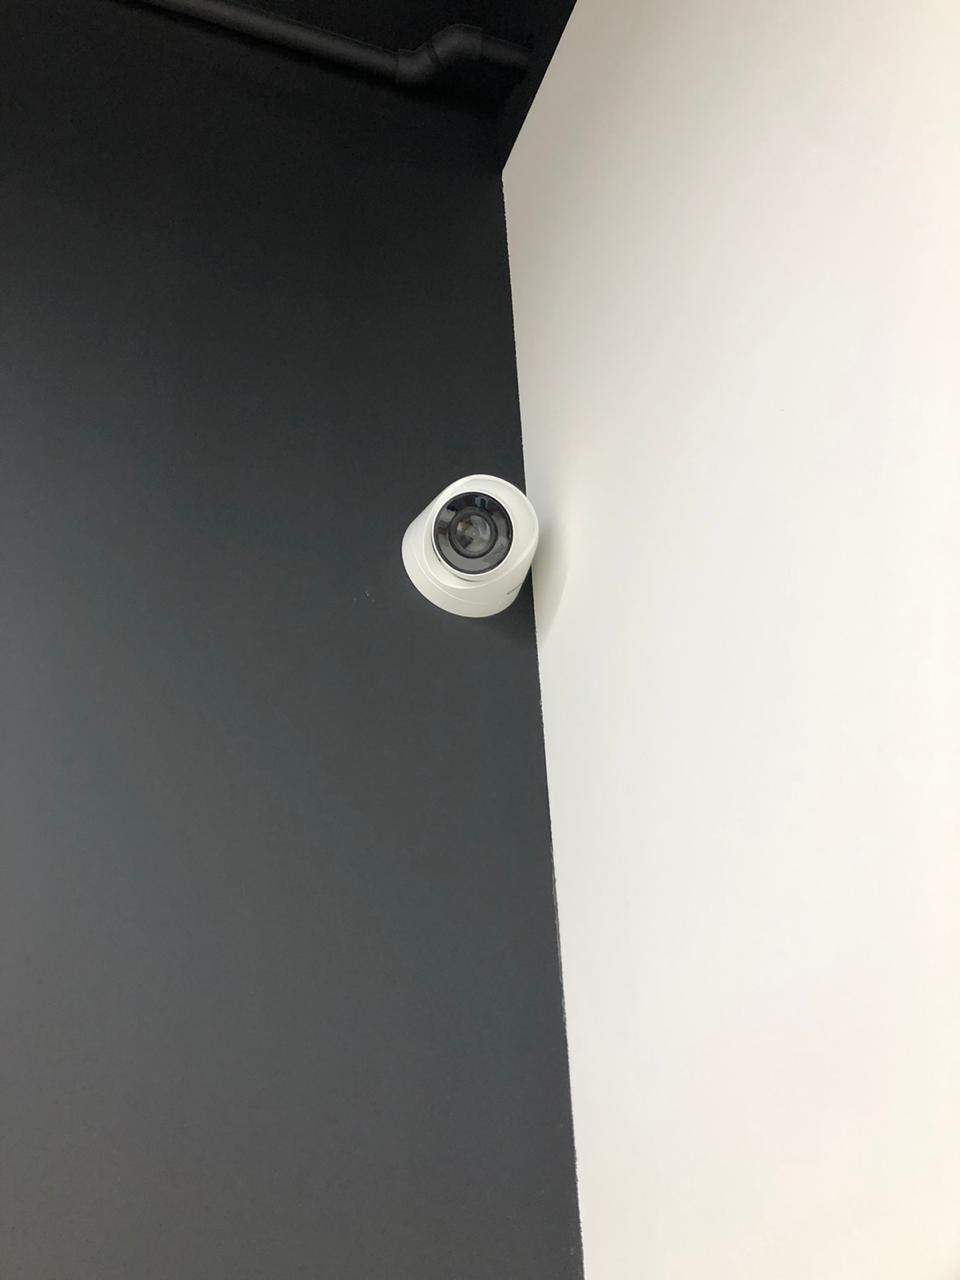 купольная камера на стене офиса